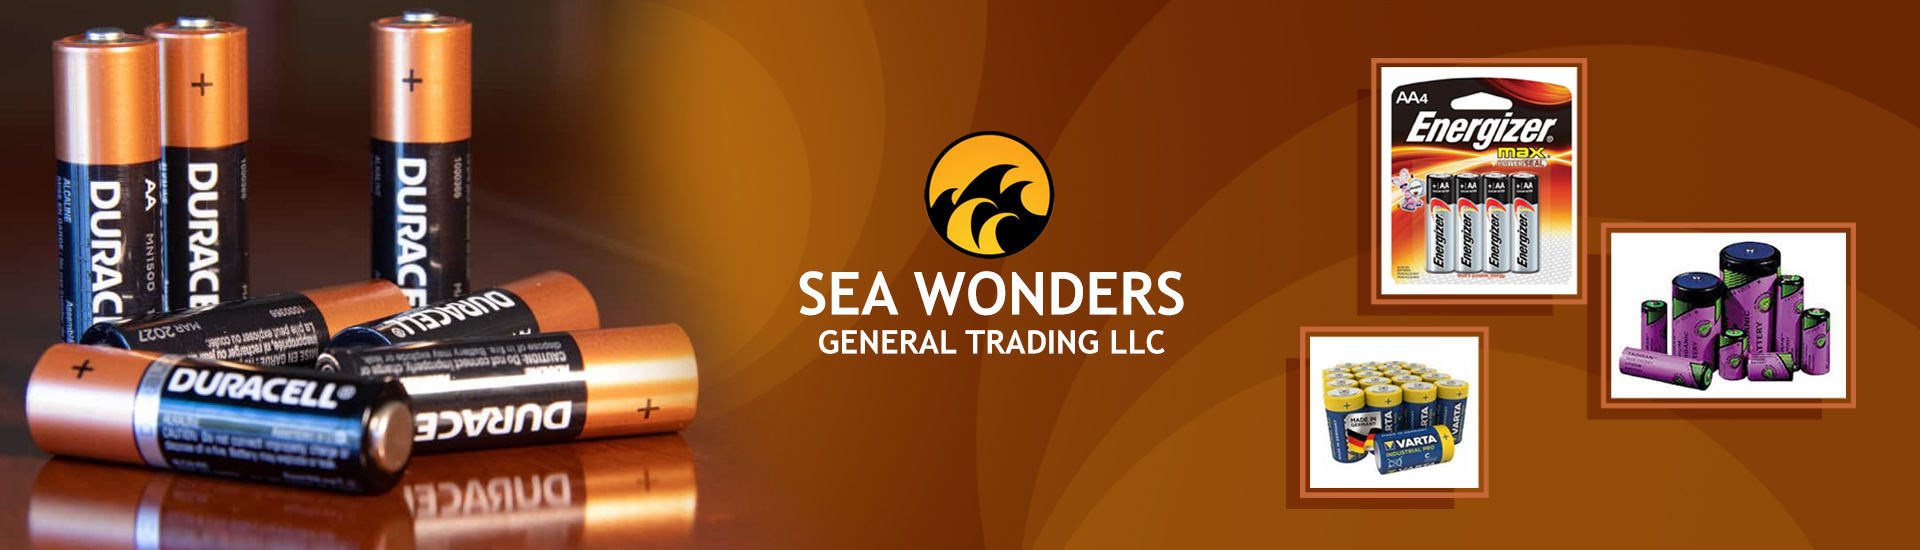 SEA WONDERS GENERAL TRADING LLC